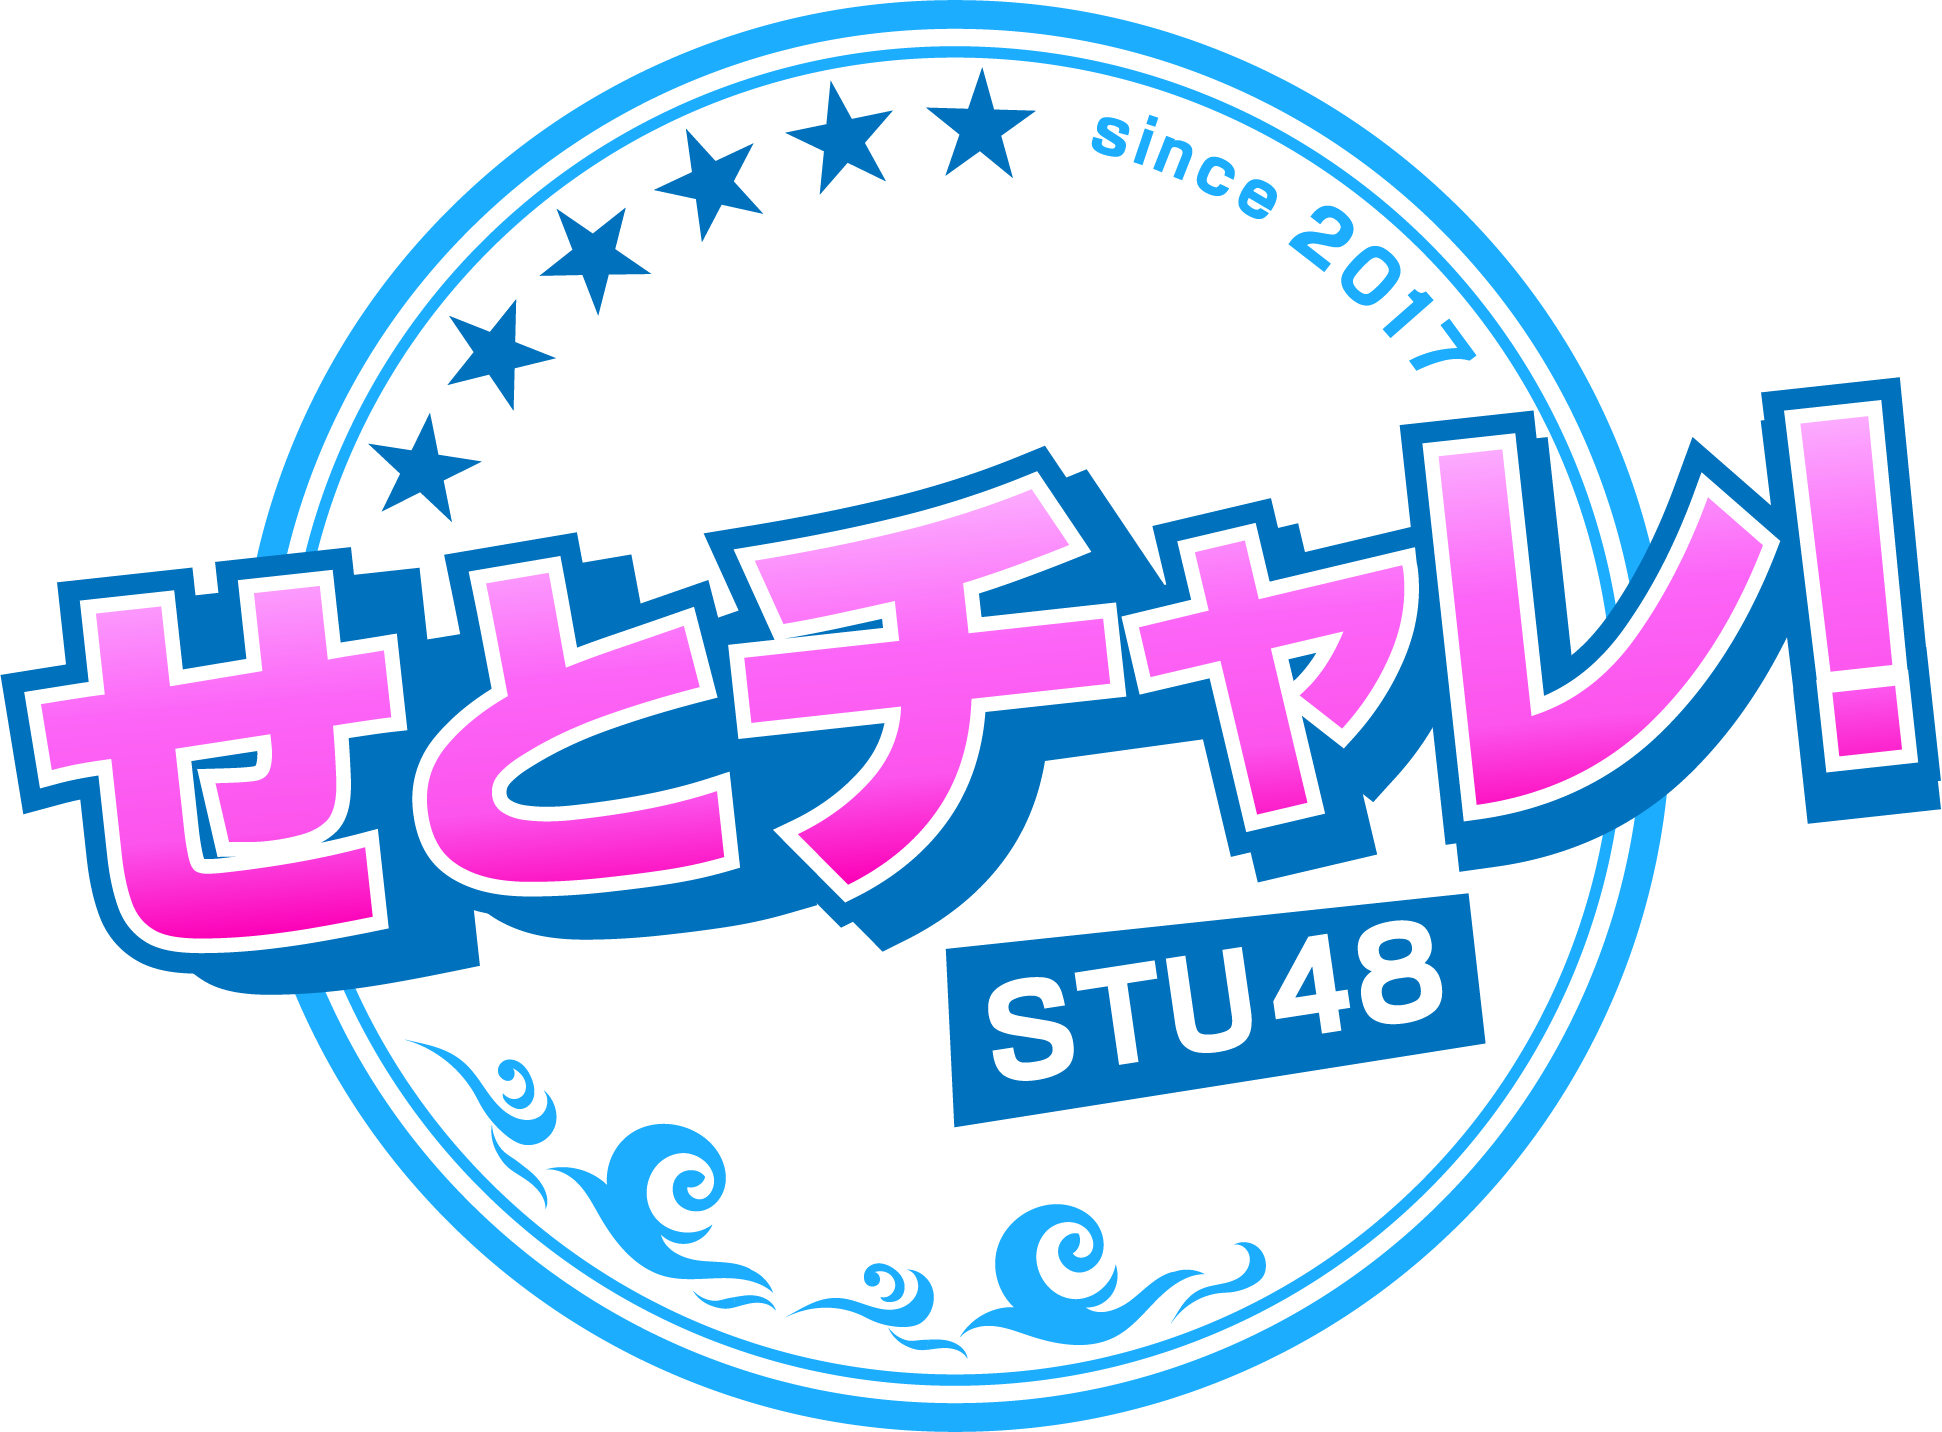 STU48のチャレンジ番組「せとチャレ！STU48」10月 月間視聴率 49歳以下 同時間帯1位を獲得！